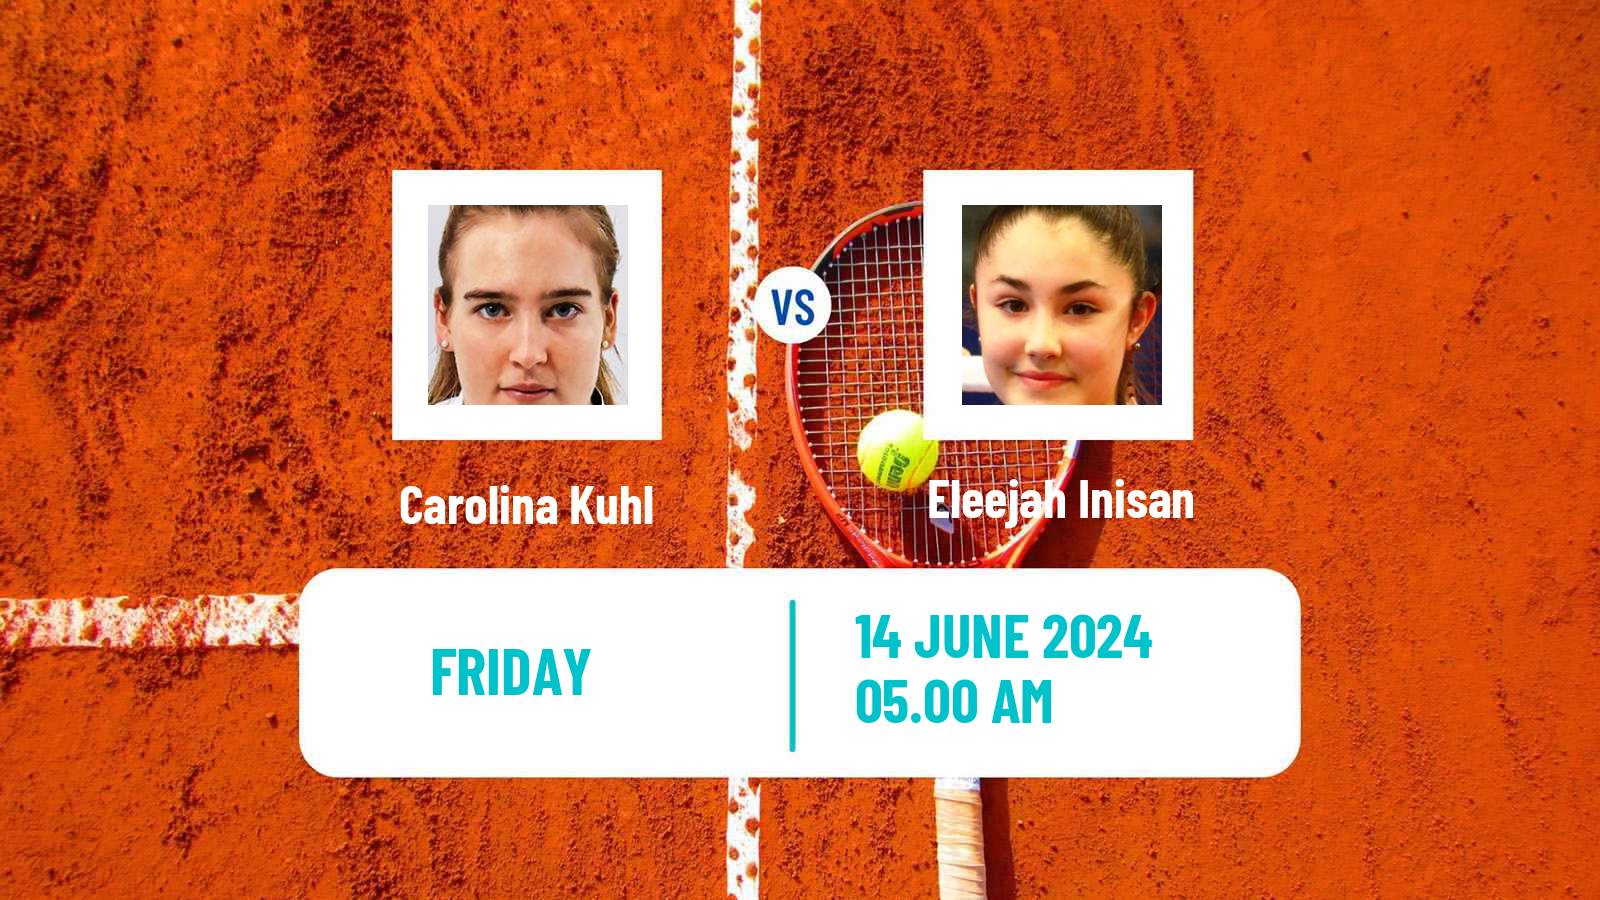 Tennis ITF W15 Madrid 2 Women Carolina Kuhl - Eleejah Inisan